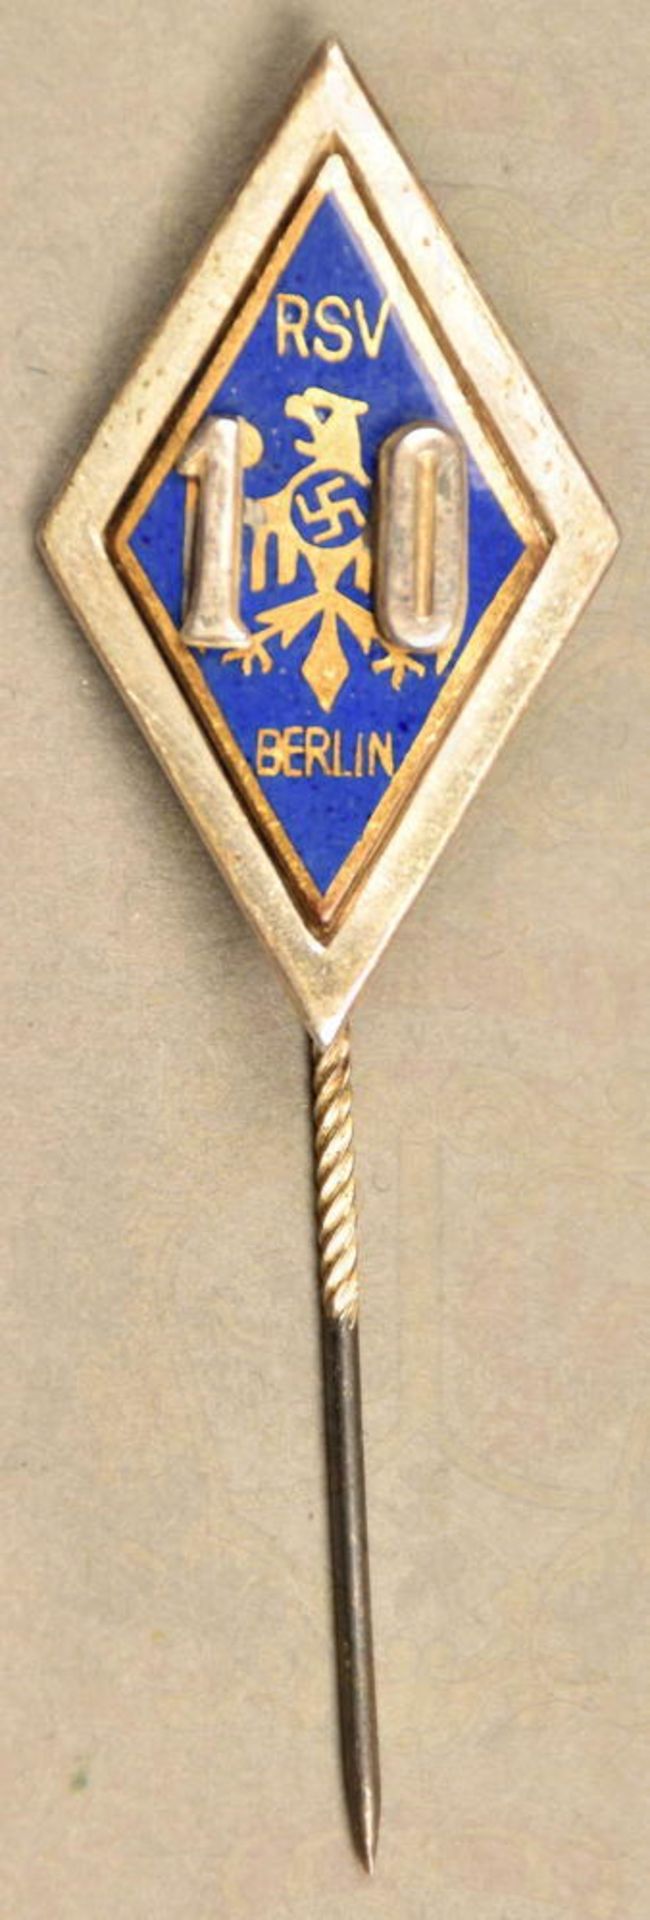 Silver honour badge Reichsbahn sports club Berlin - Image 2 of 3